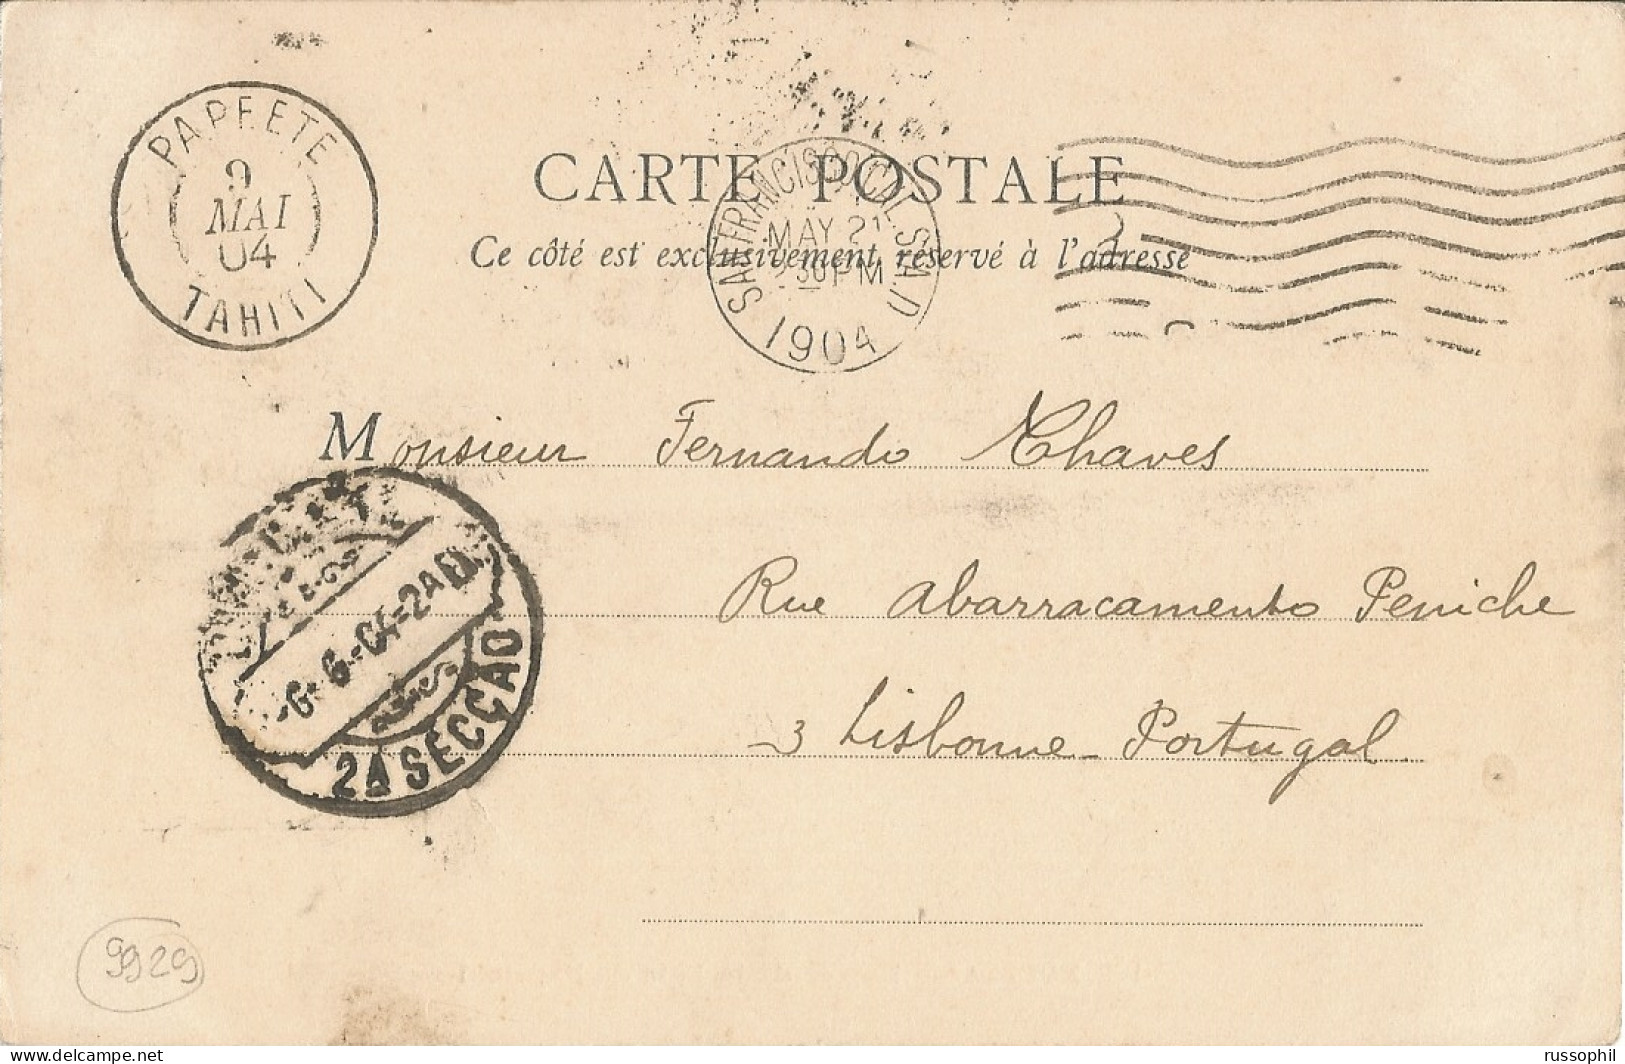 FRENCH POLYNESIA - ILE MOOREA - ENTREE DE LA BAIE DE PAPETOIA - 1904 - Polynésie Française